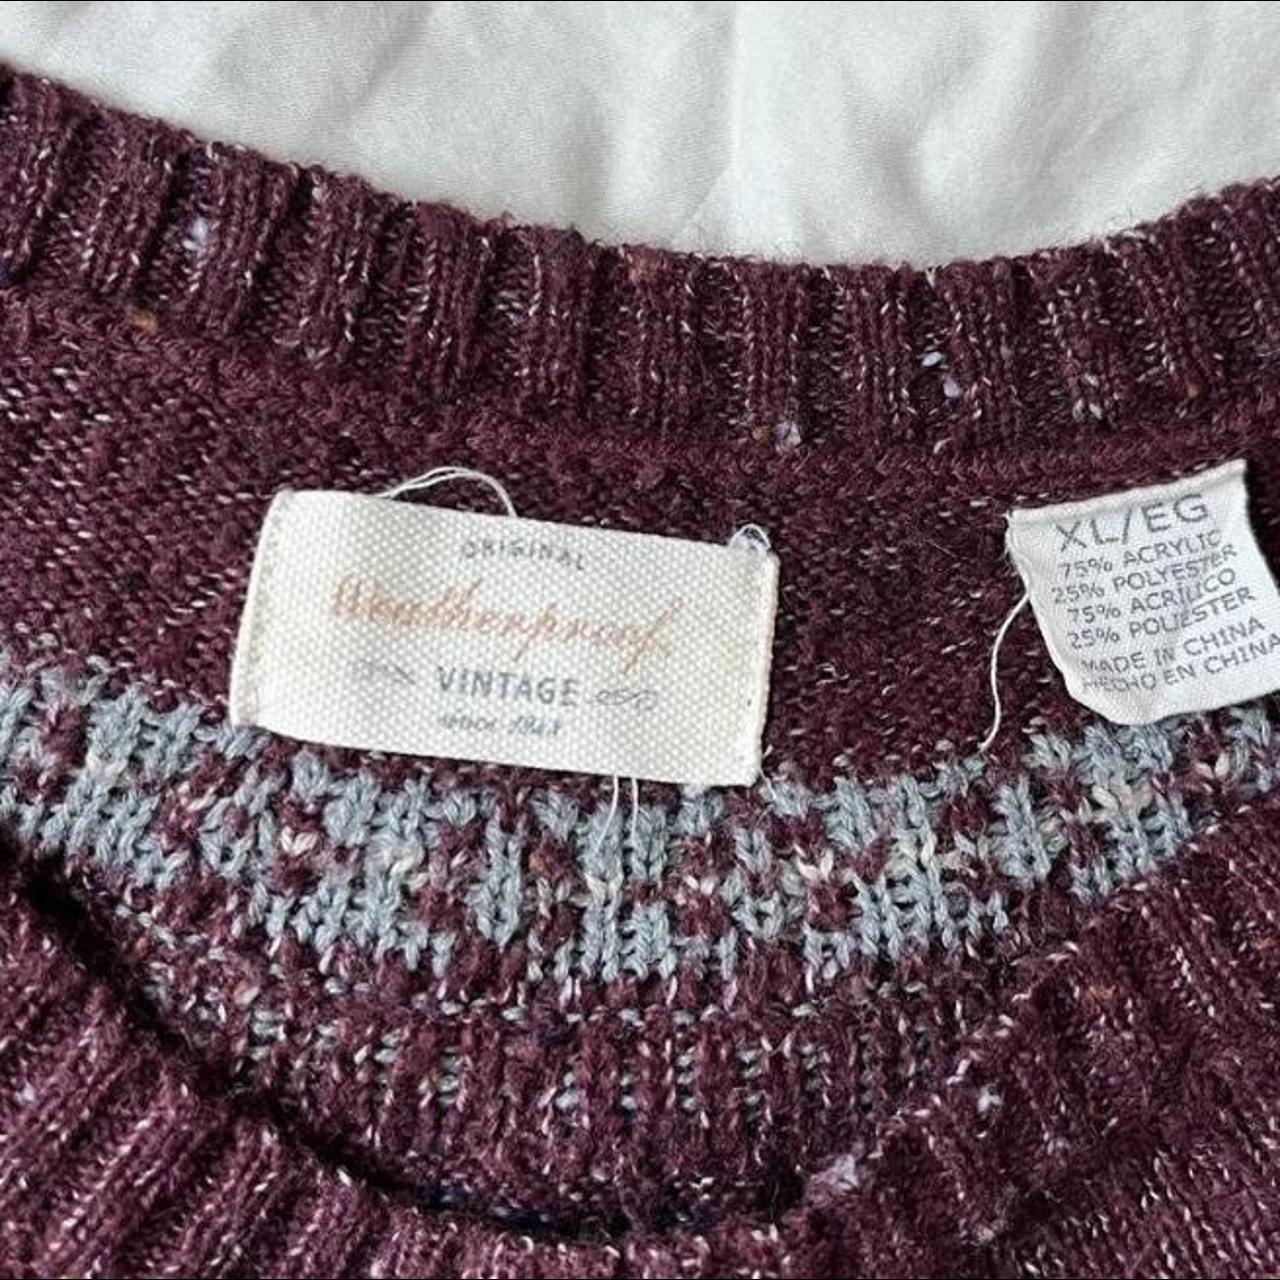 Burgundy Fair isle sweater, size XL Super soft +... - Depop